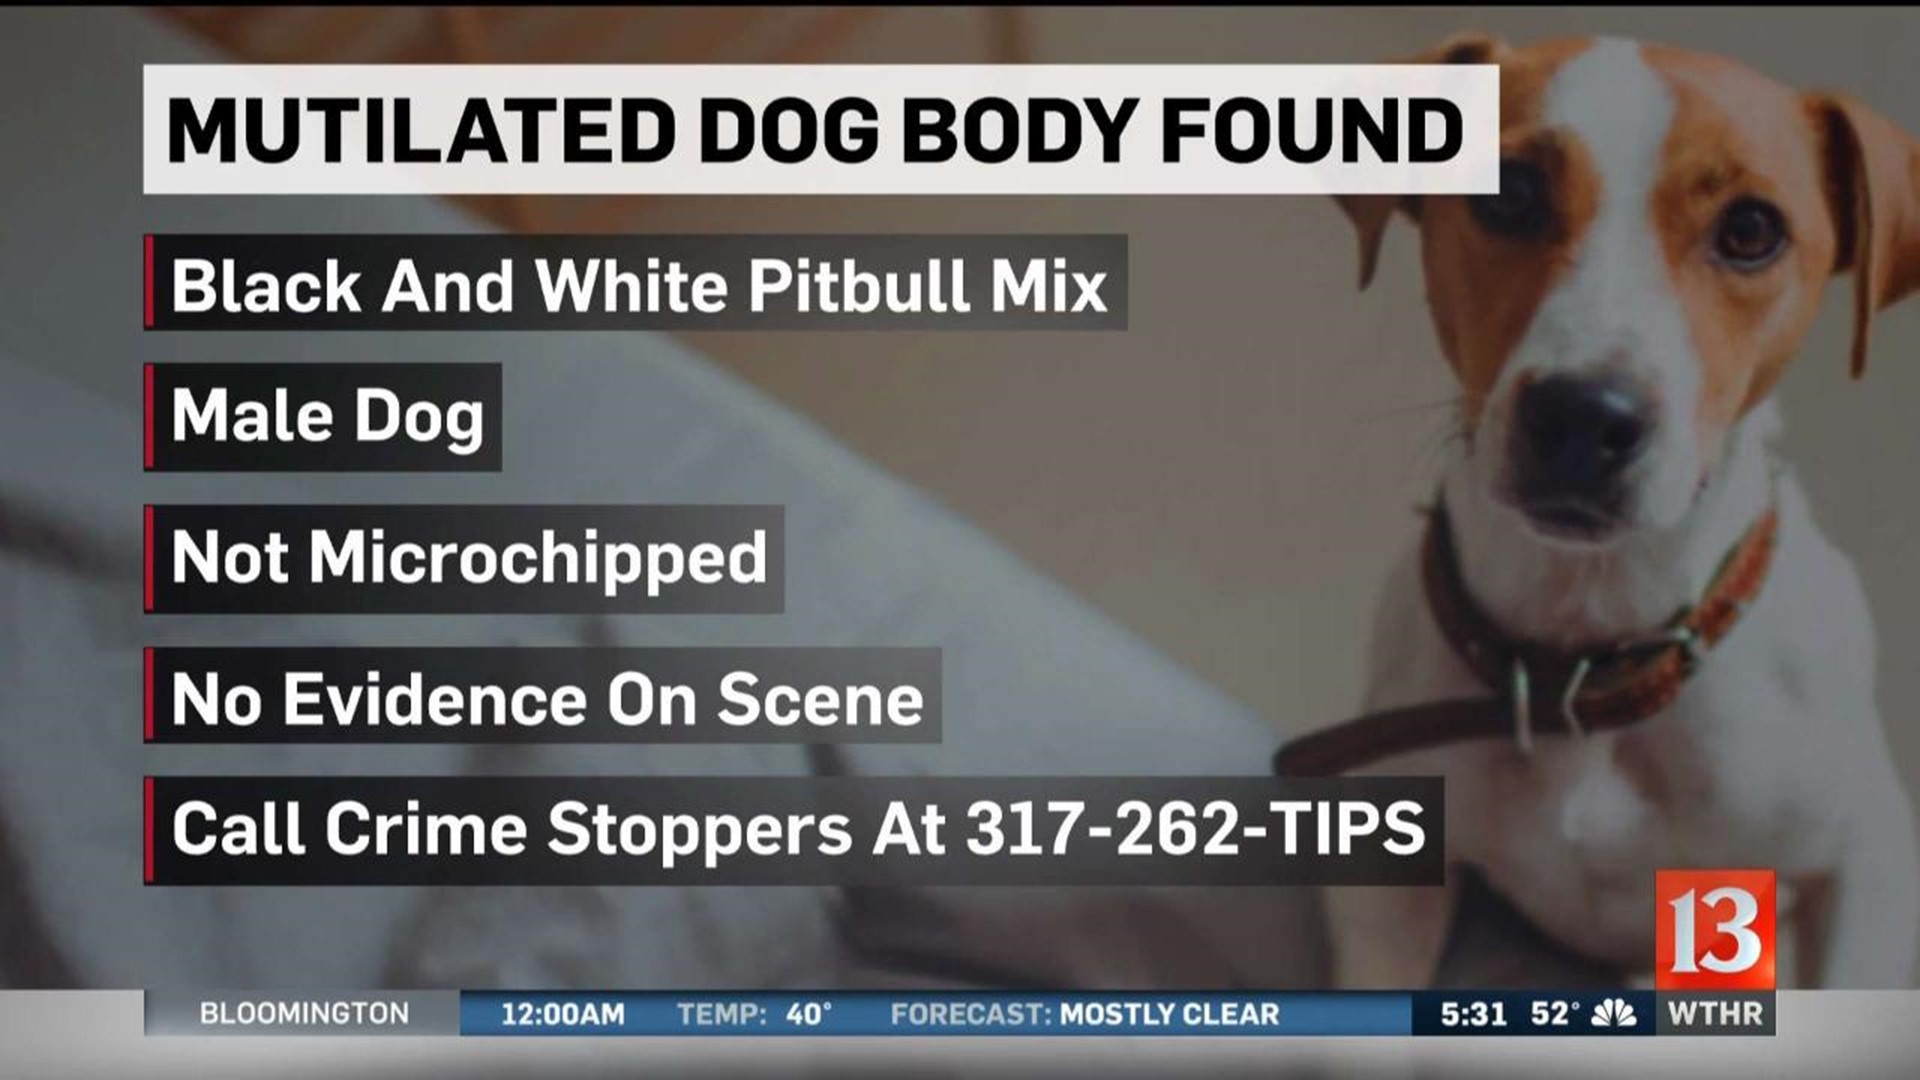 Mutilated dog body found